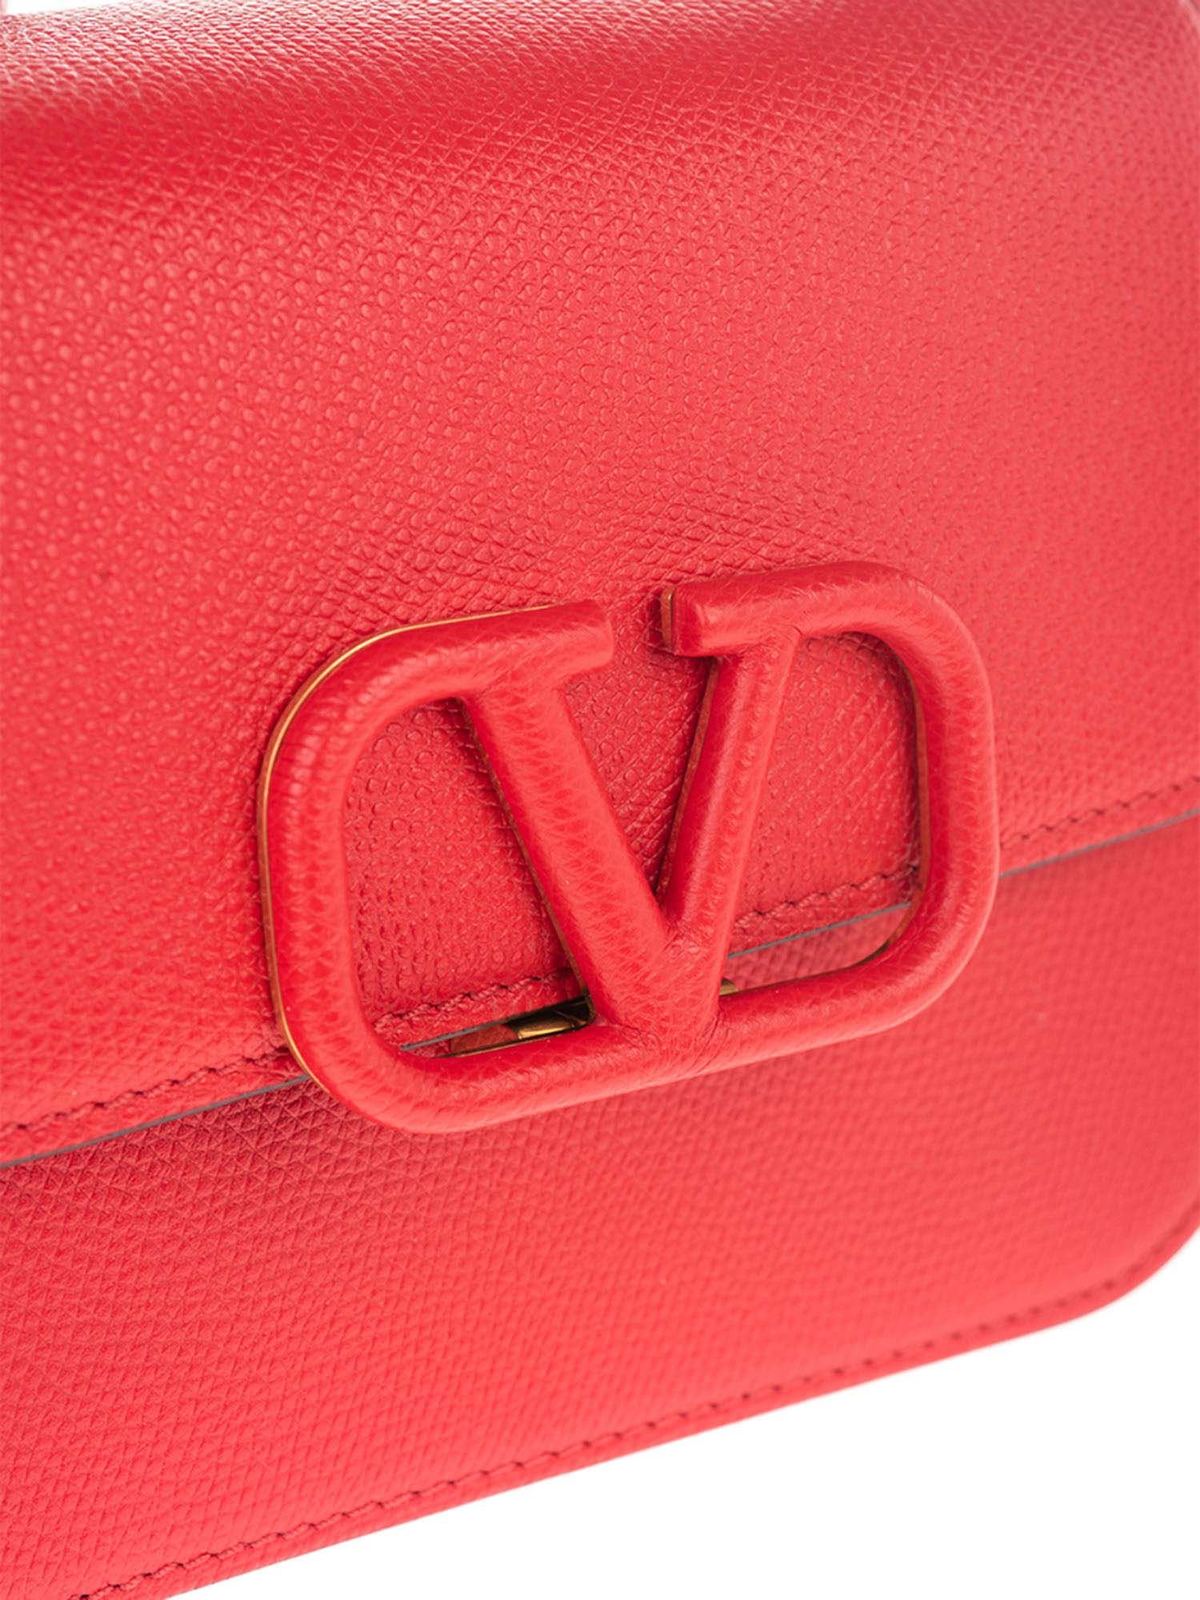 Vsling Grainy Calfskin Shoulder Bag by Valentino Garavani at